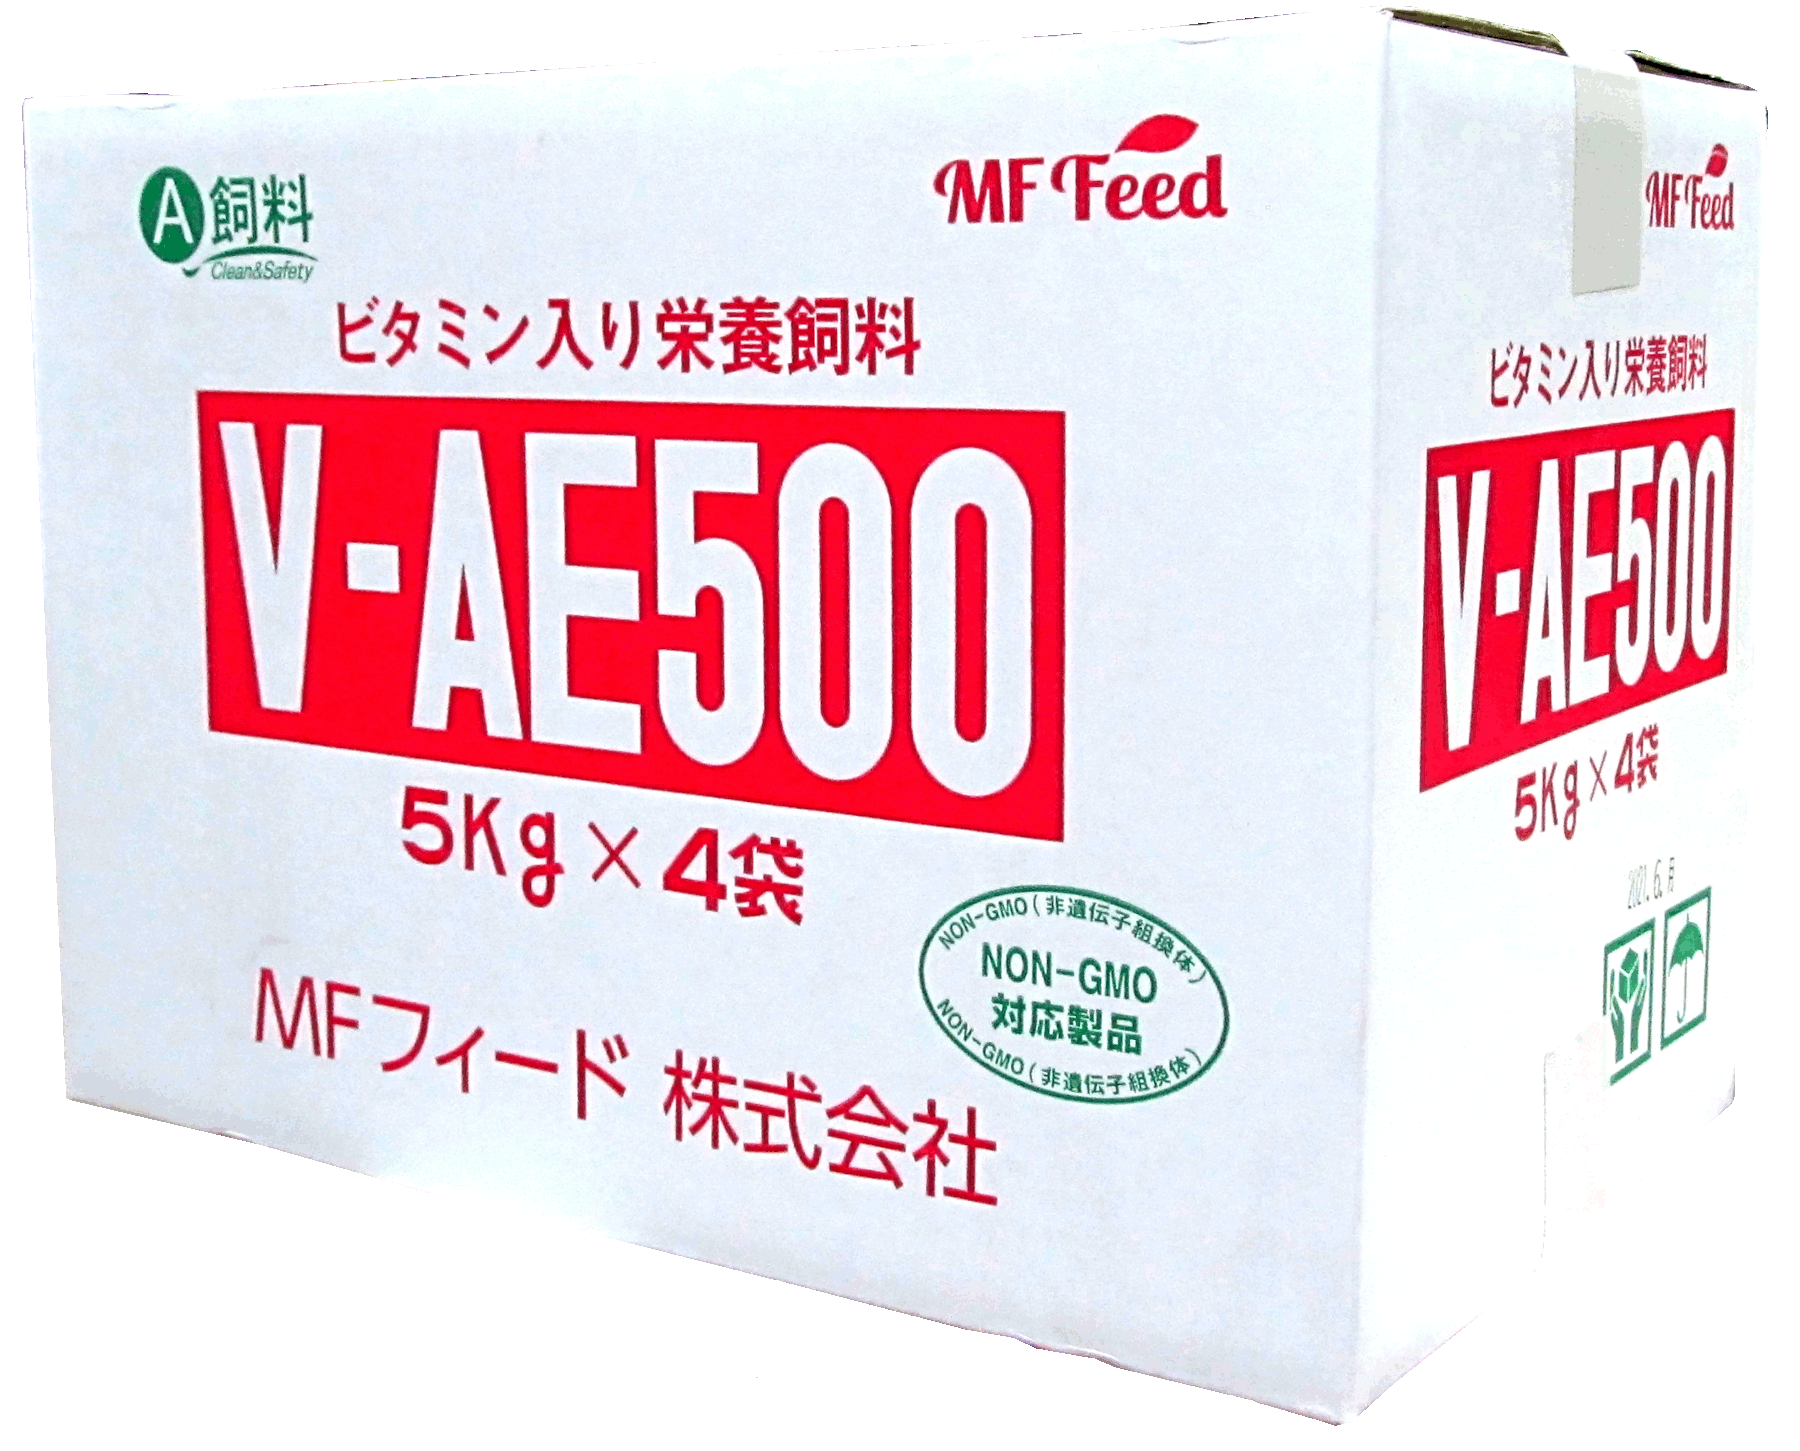 V-AE500